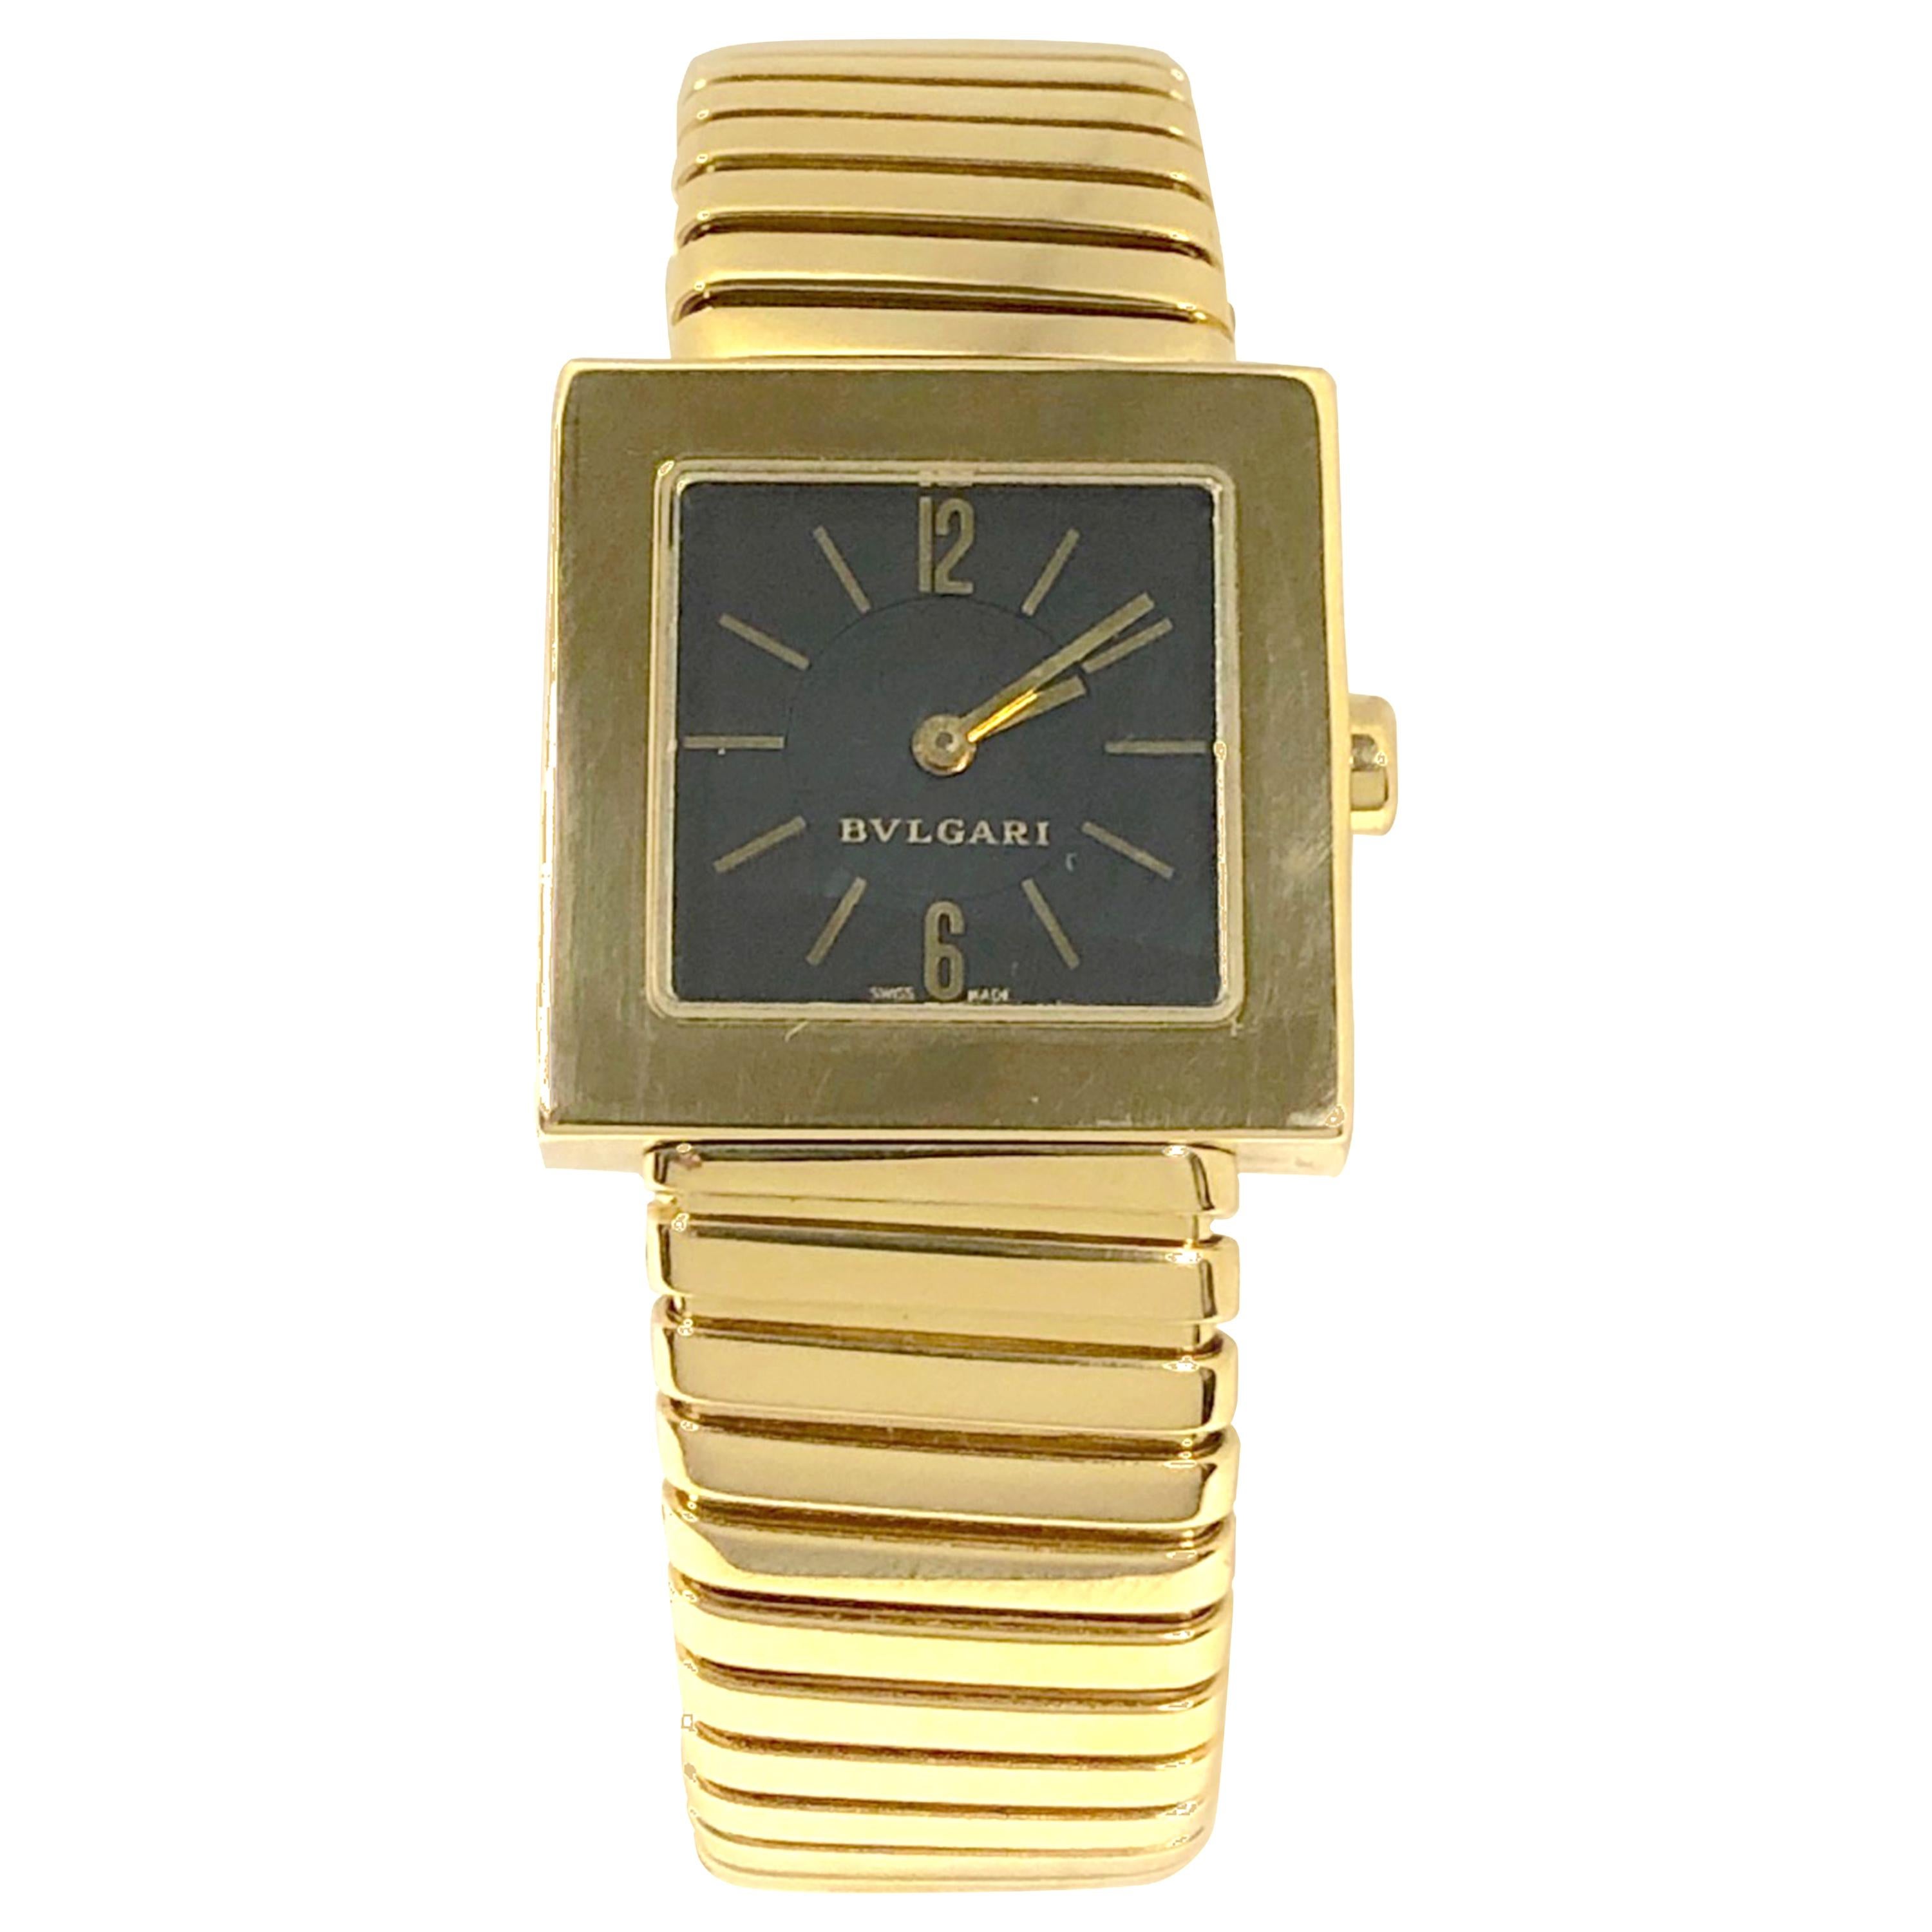 Bulgari Tubogas Yellow Gold Wristwatch